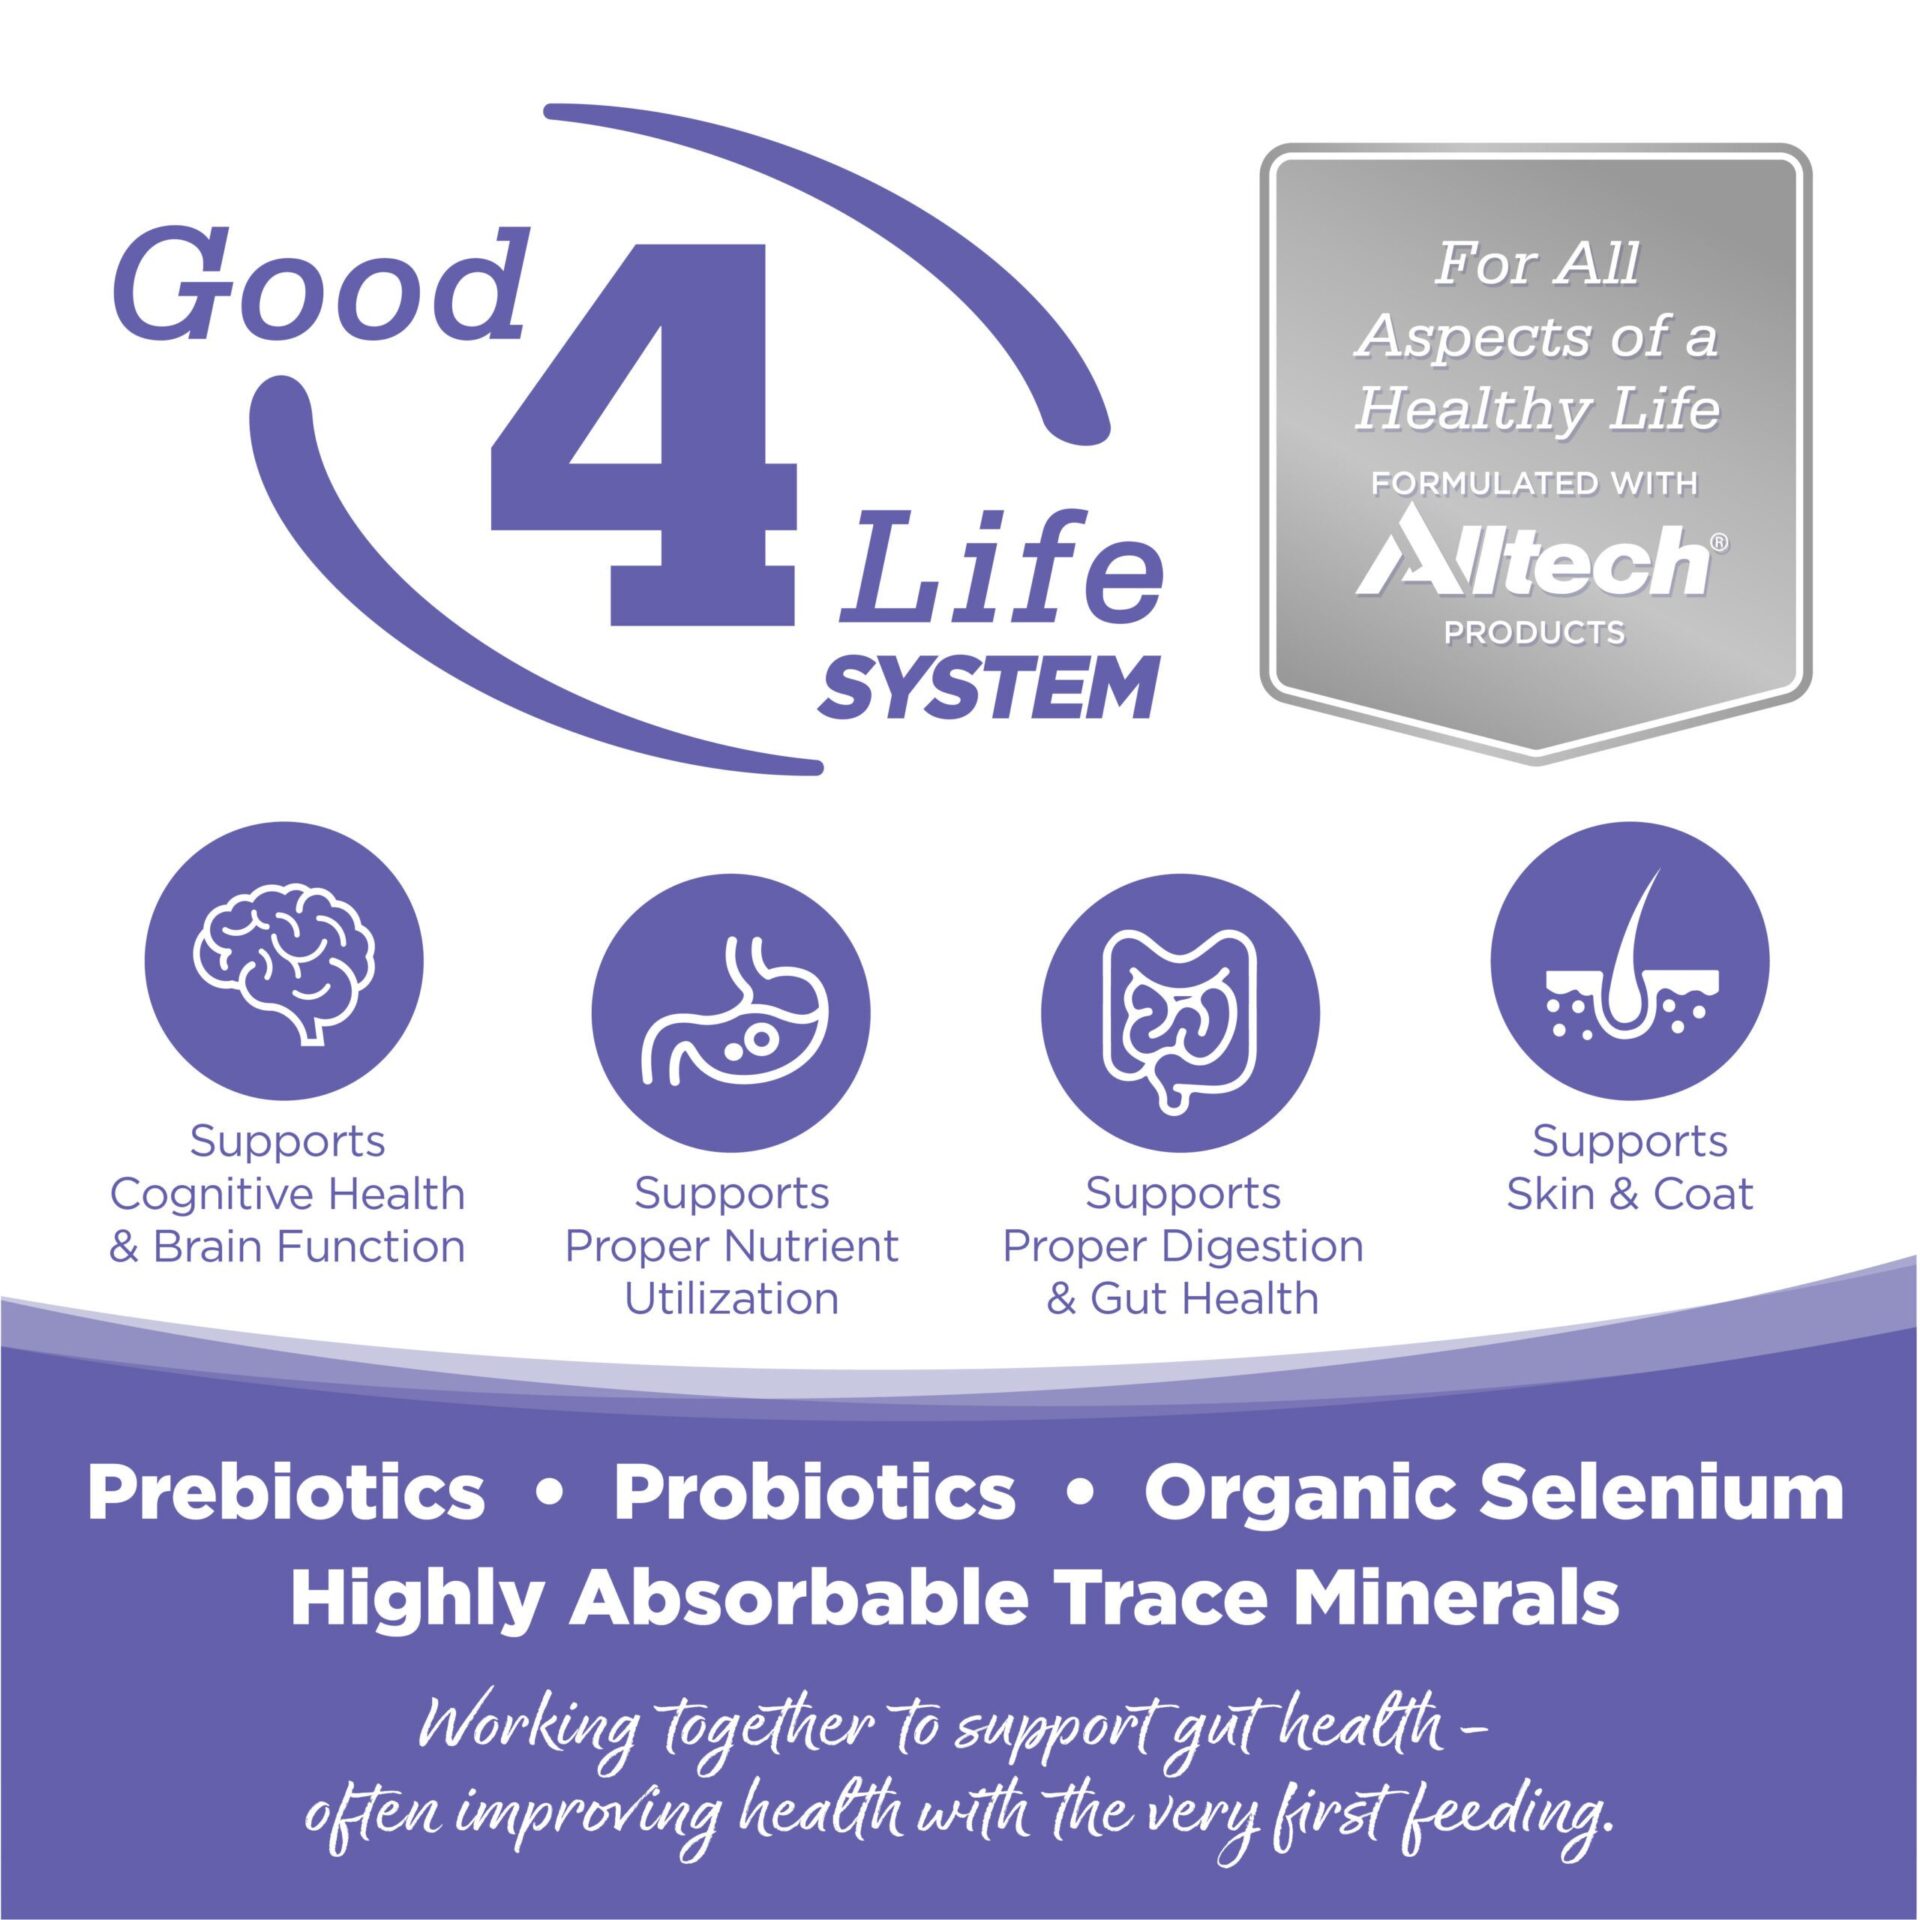 Good 4 Life System